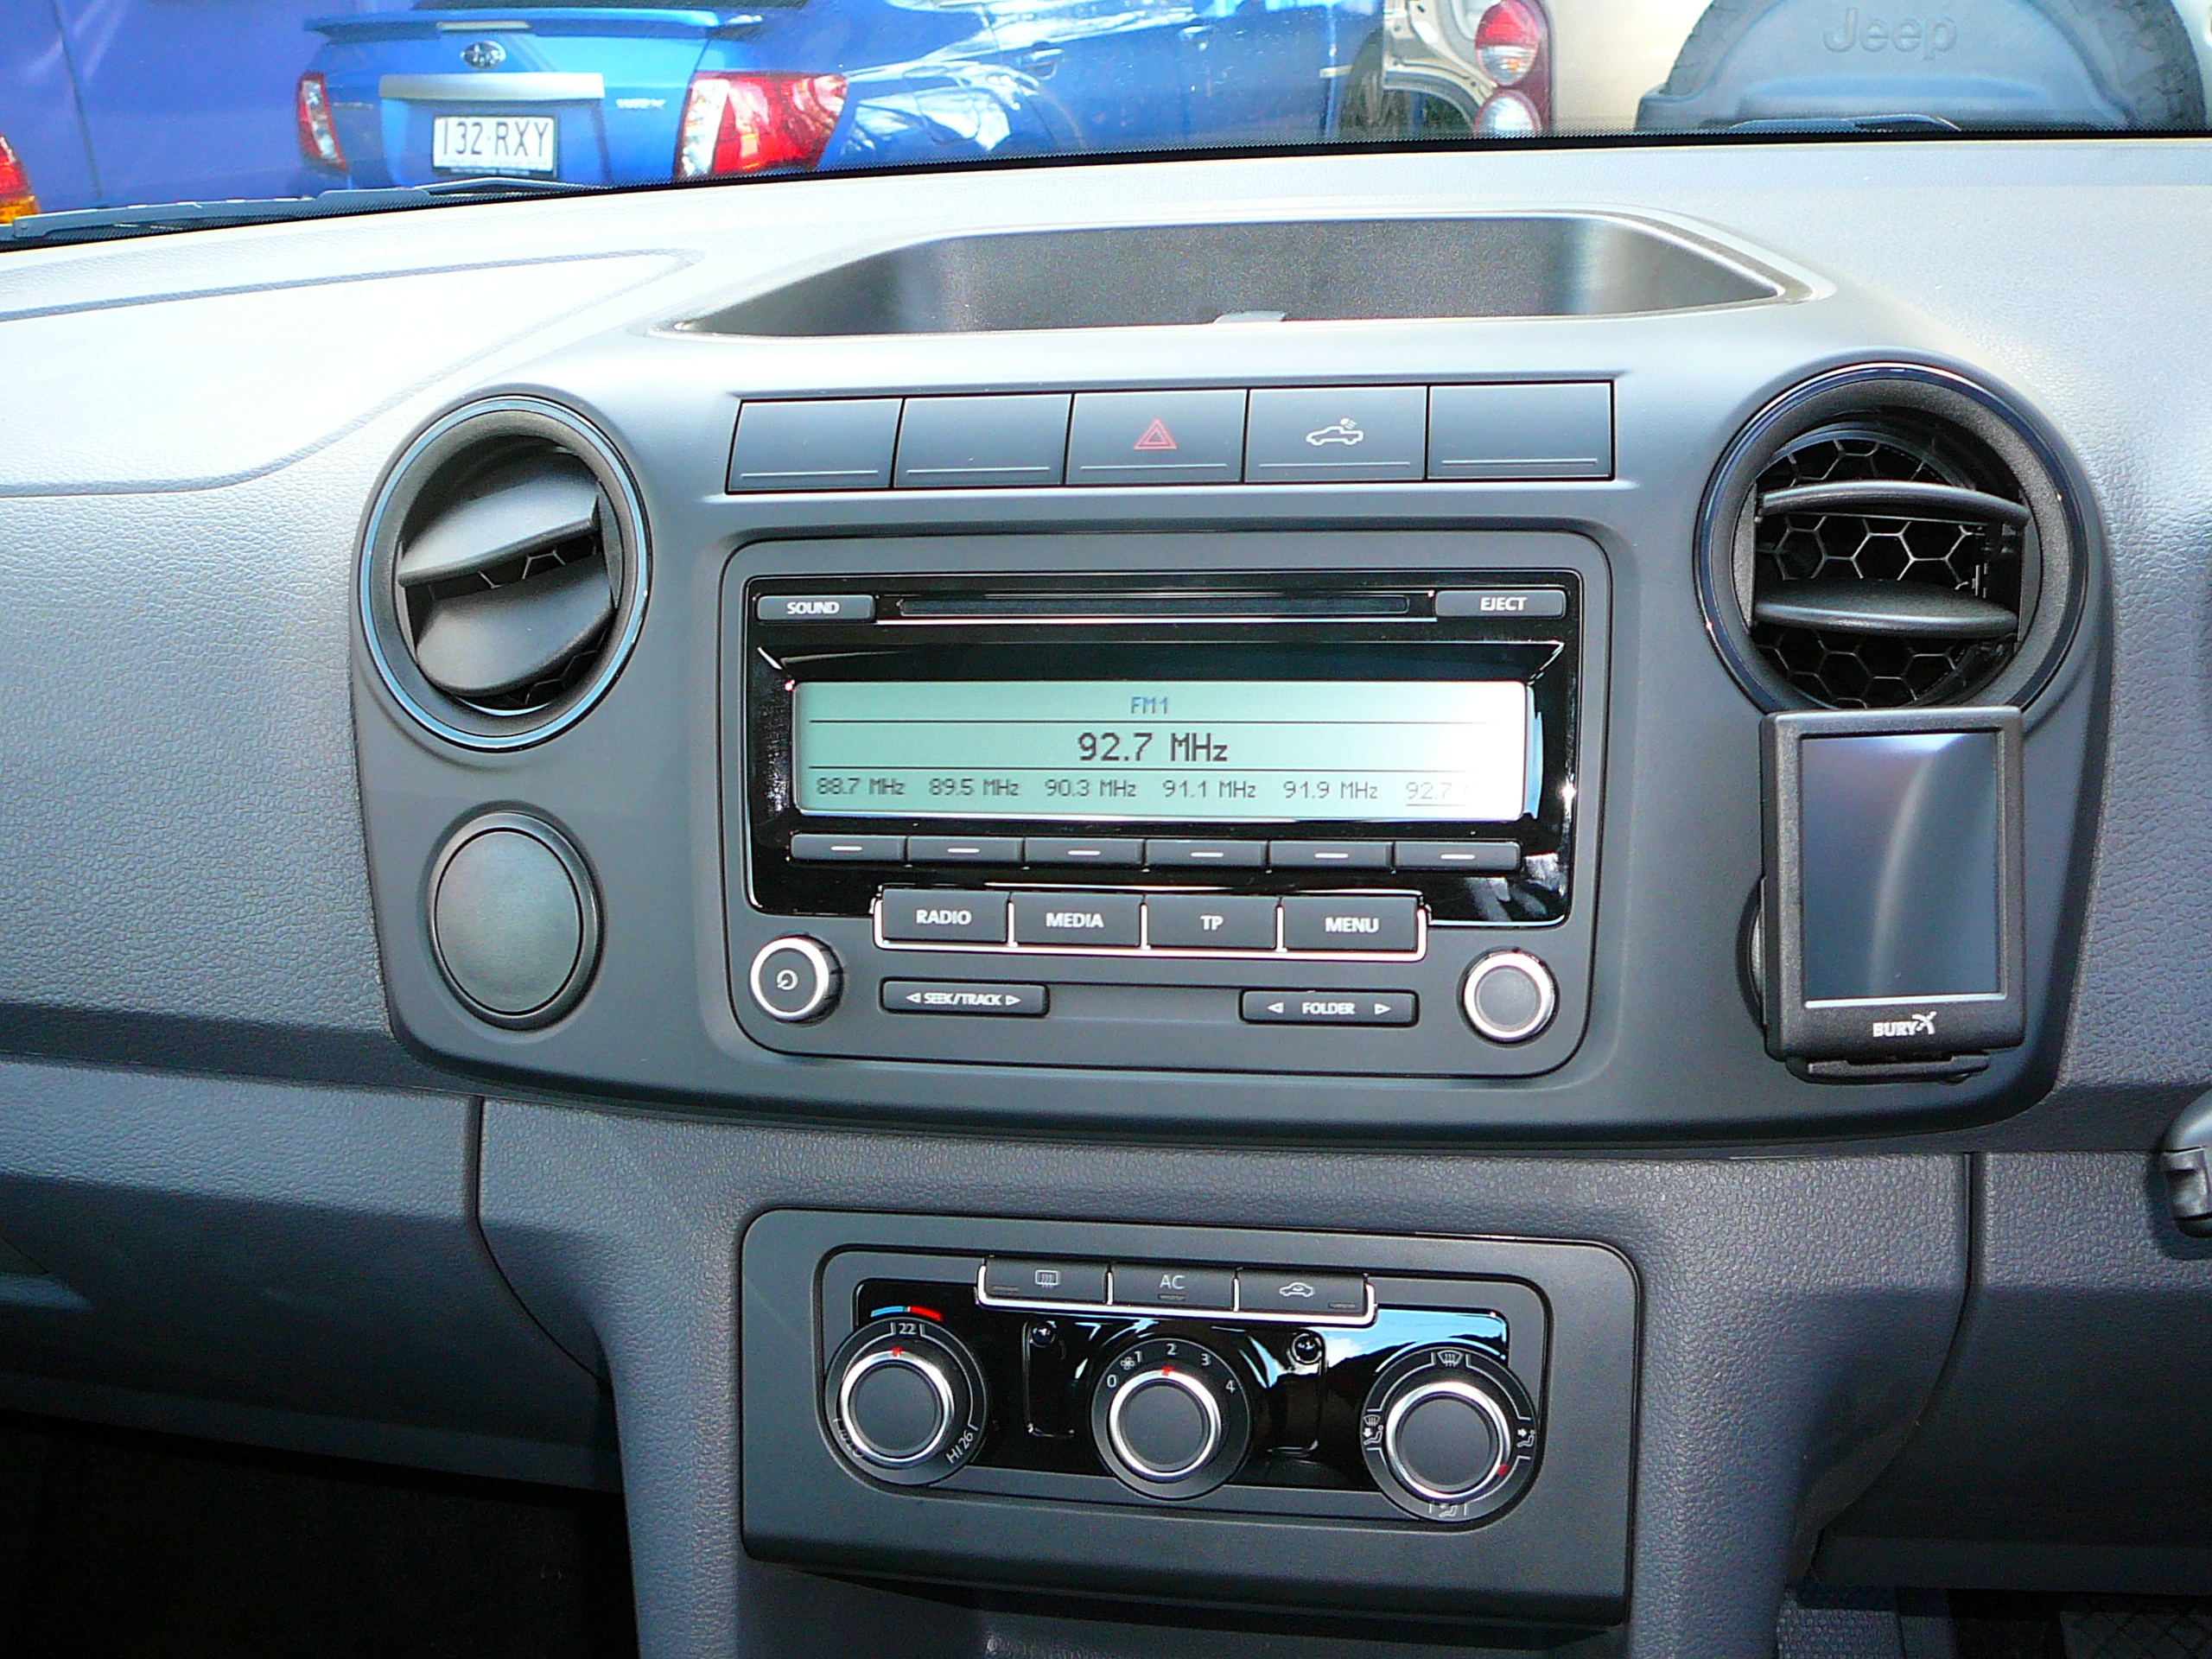 VW Amarok 2012 Reverse Parking Sensors & Bluetooth Handsfree